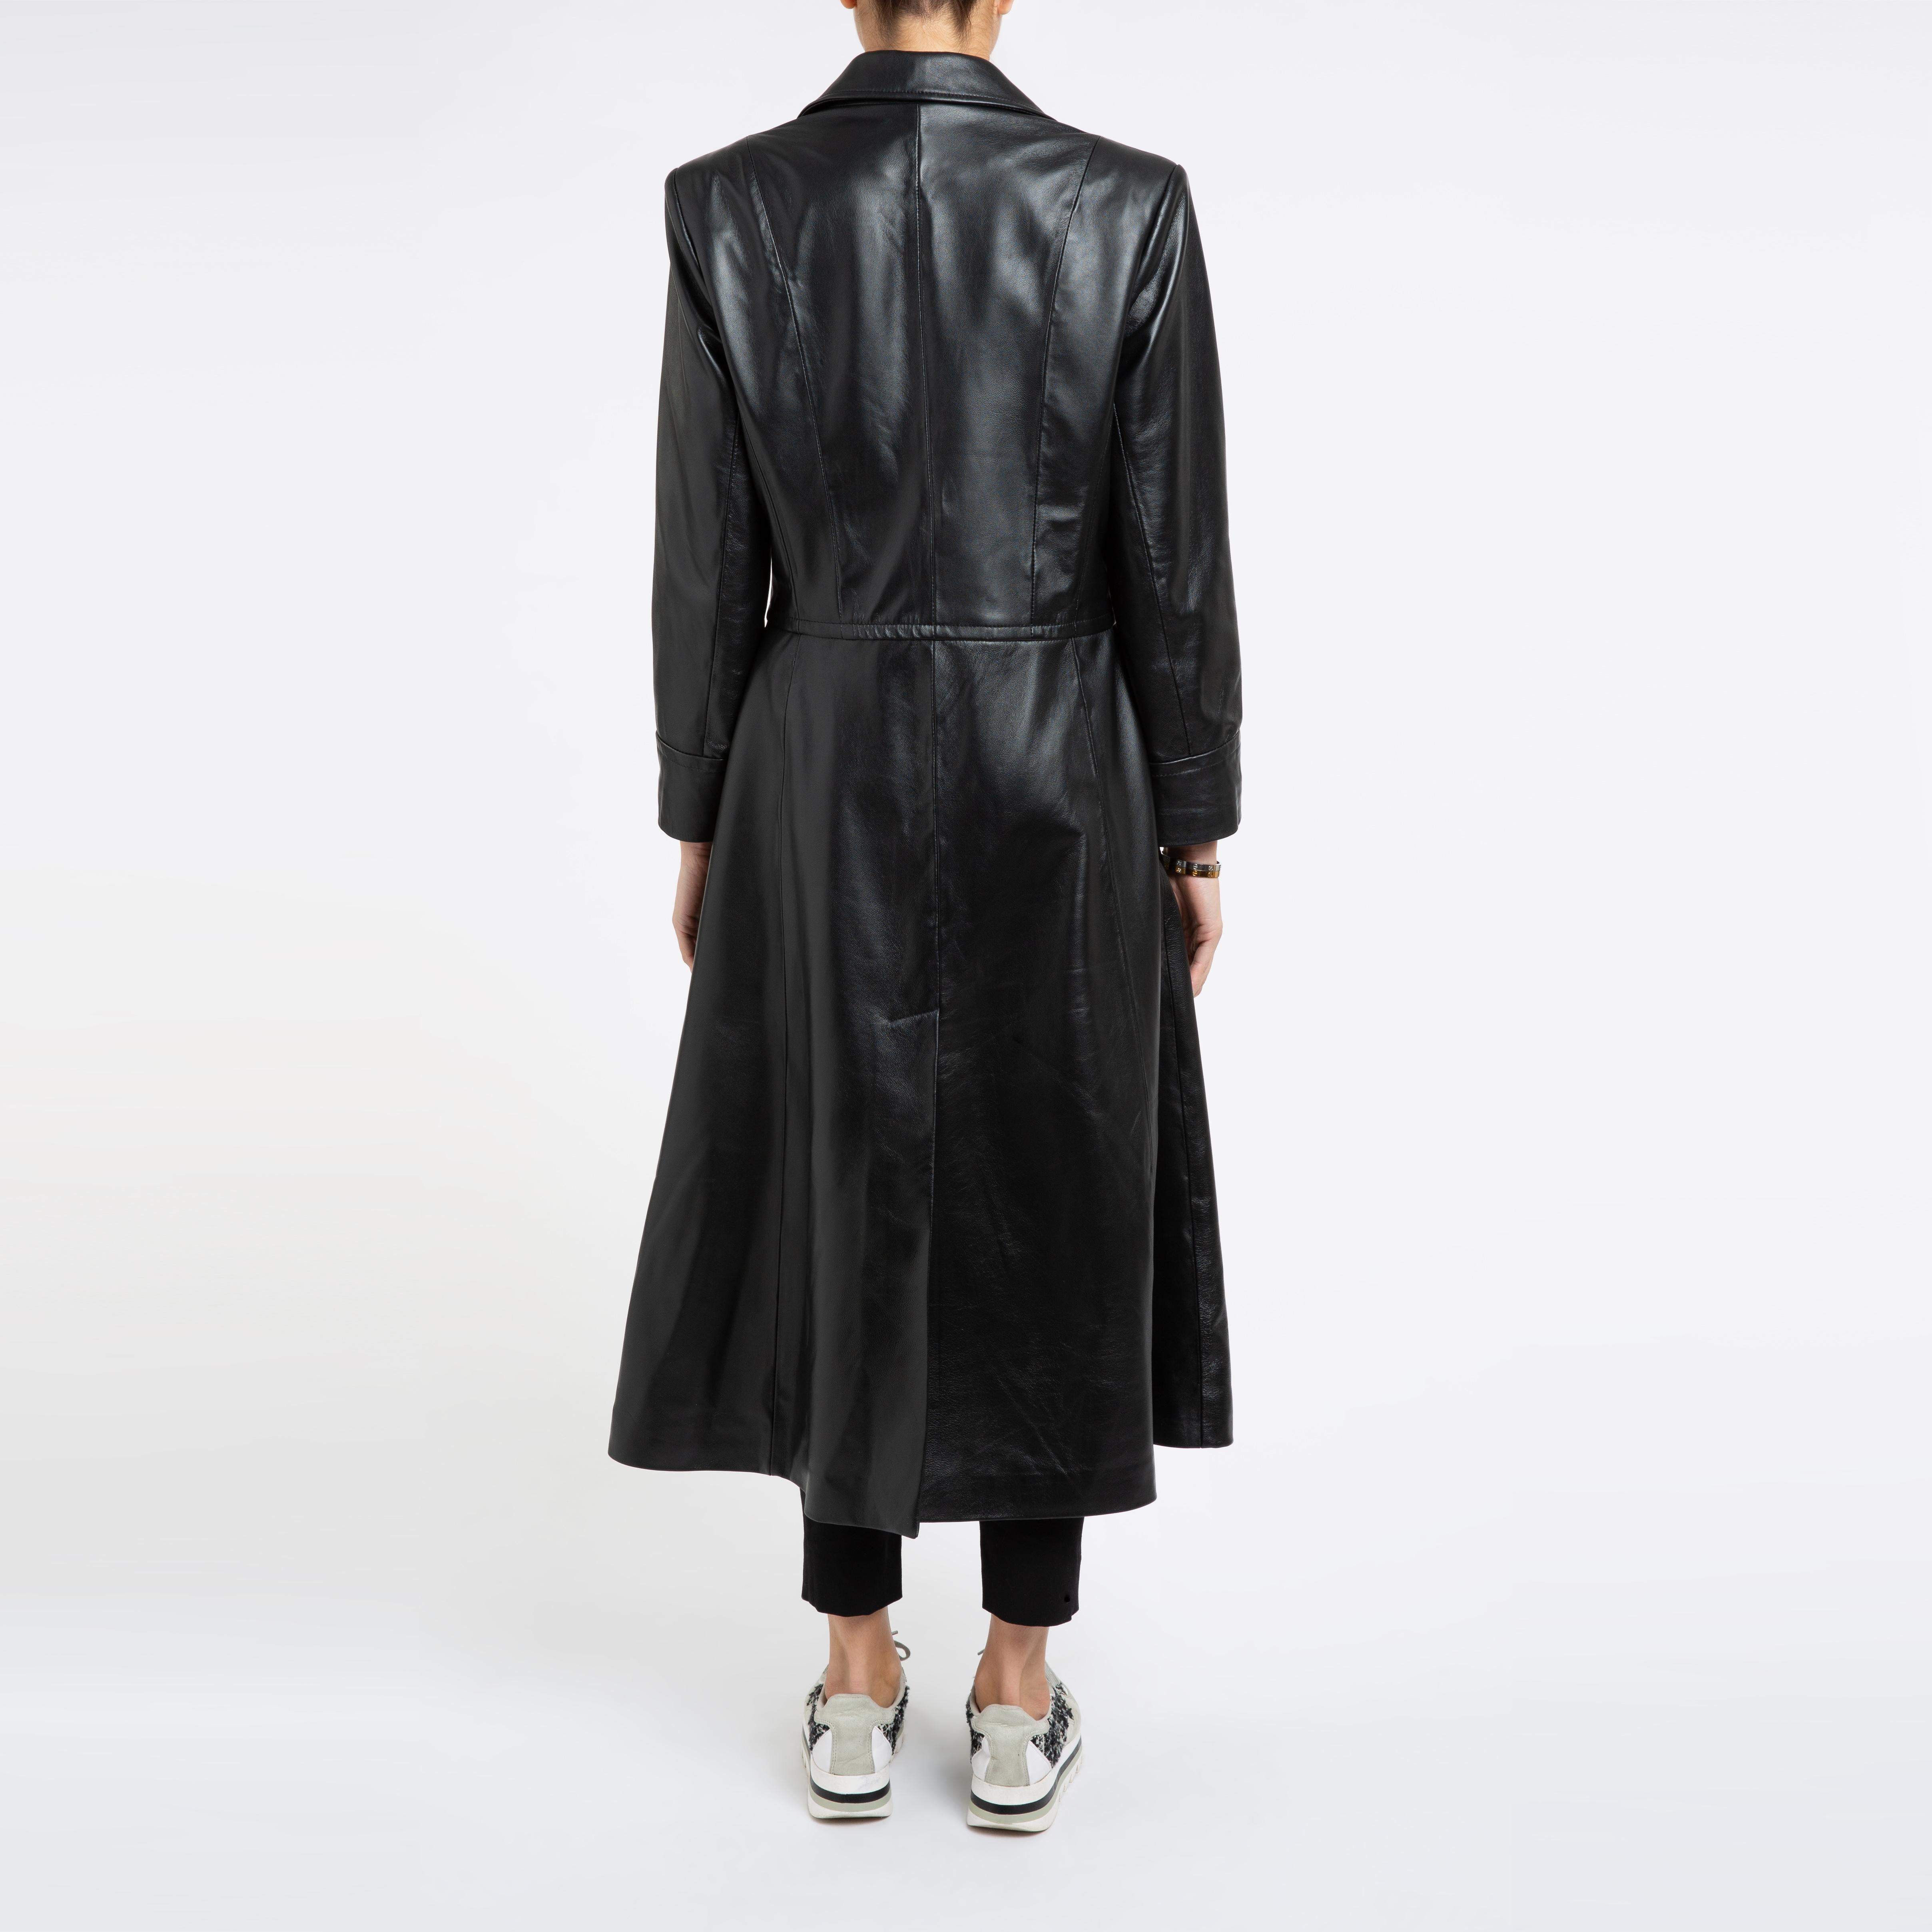 Verheyen London Oversize 70's Leather Trench Coat in Black - Size uk 8 5